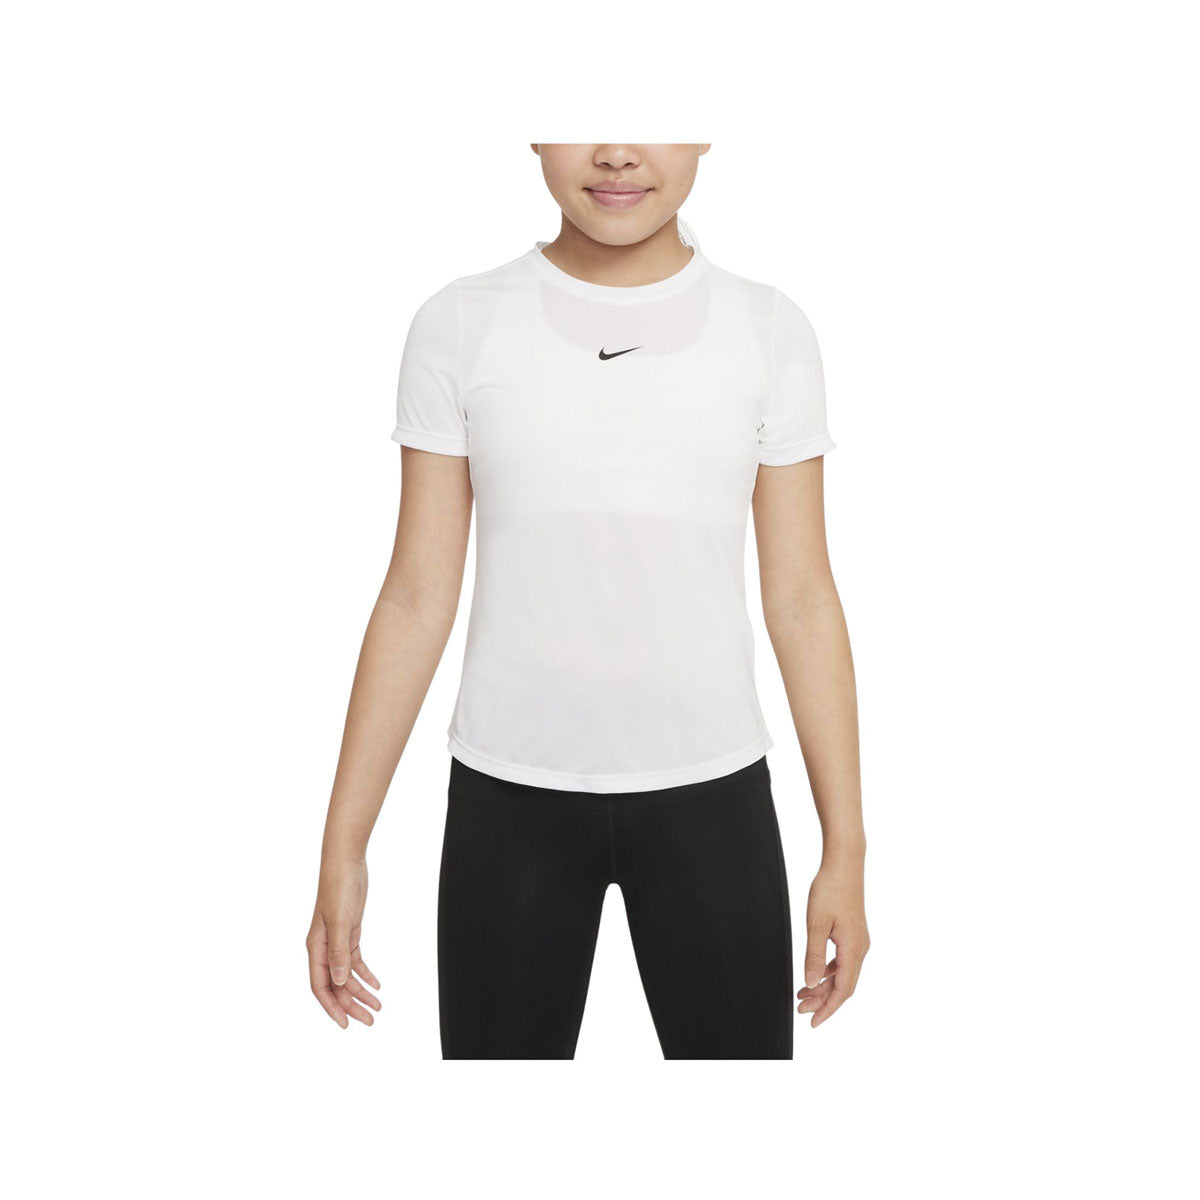 Nike Kids Dri-FIT One Short-Sleeve Top